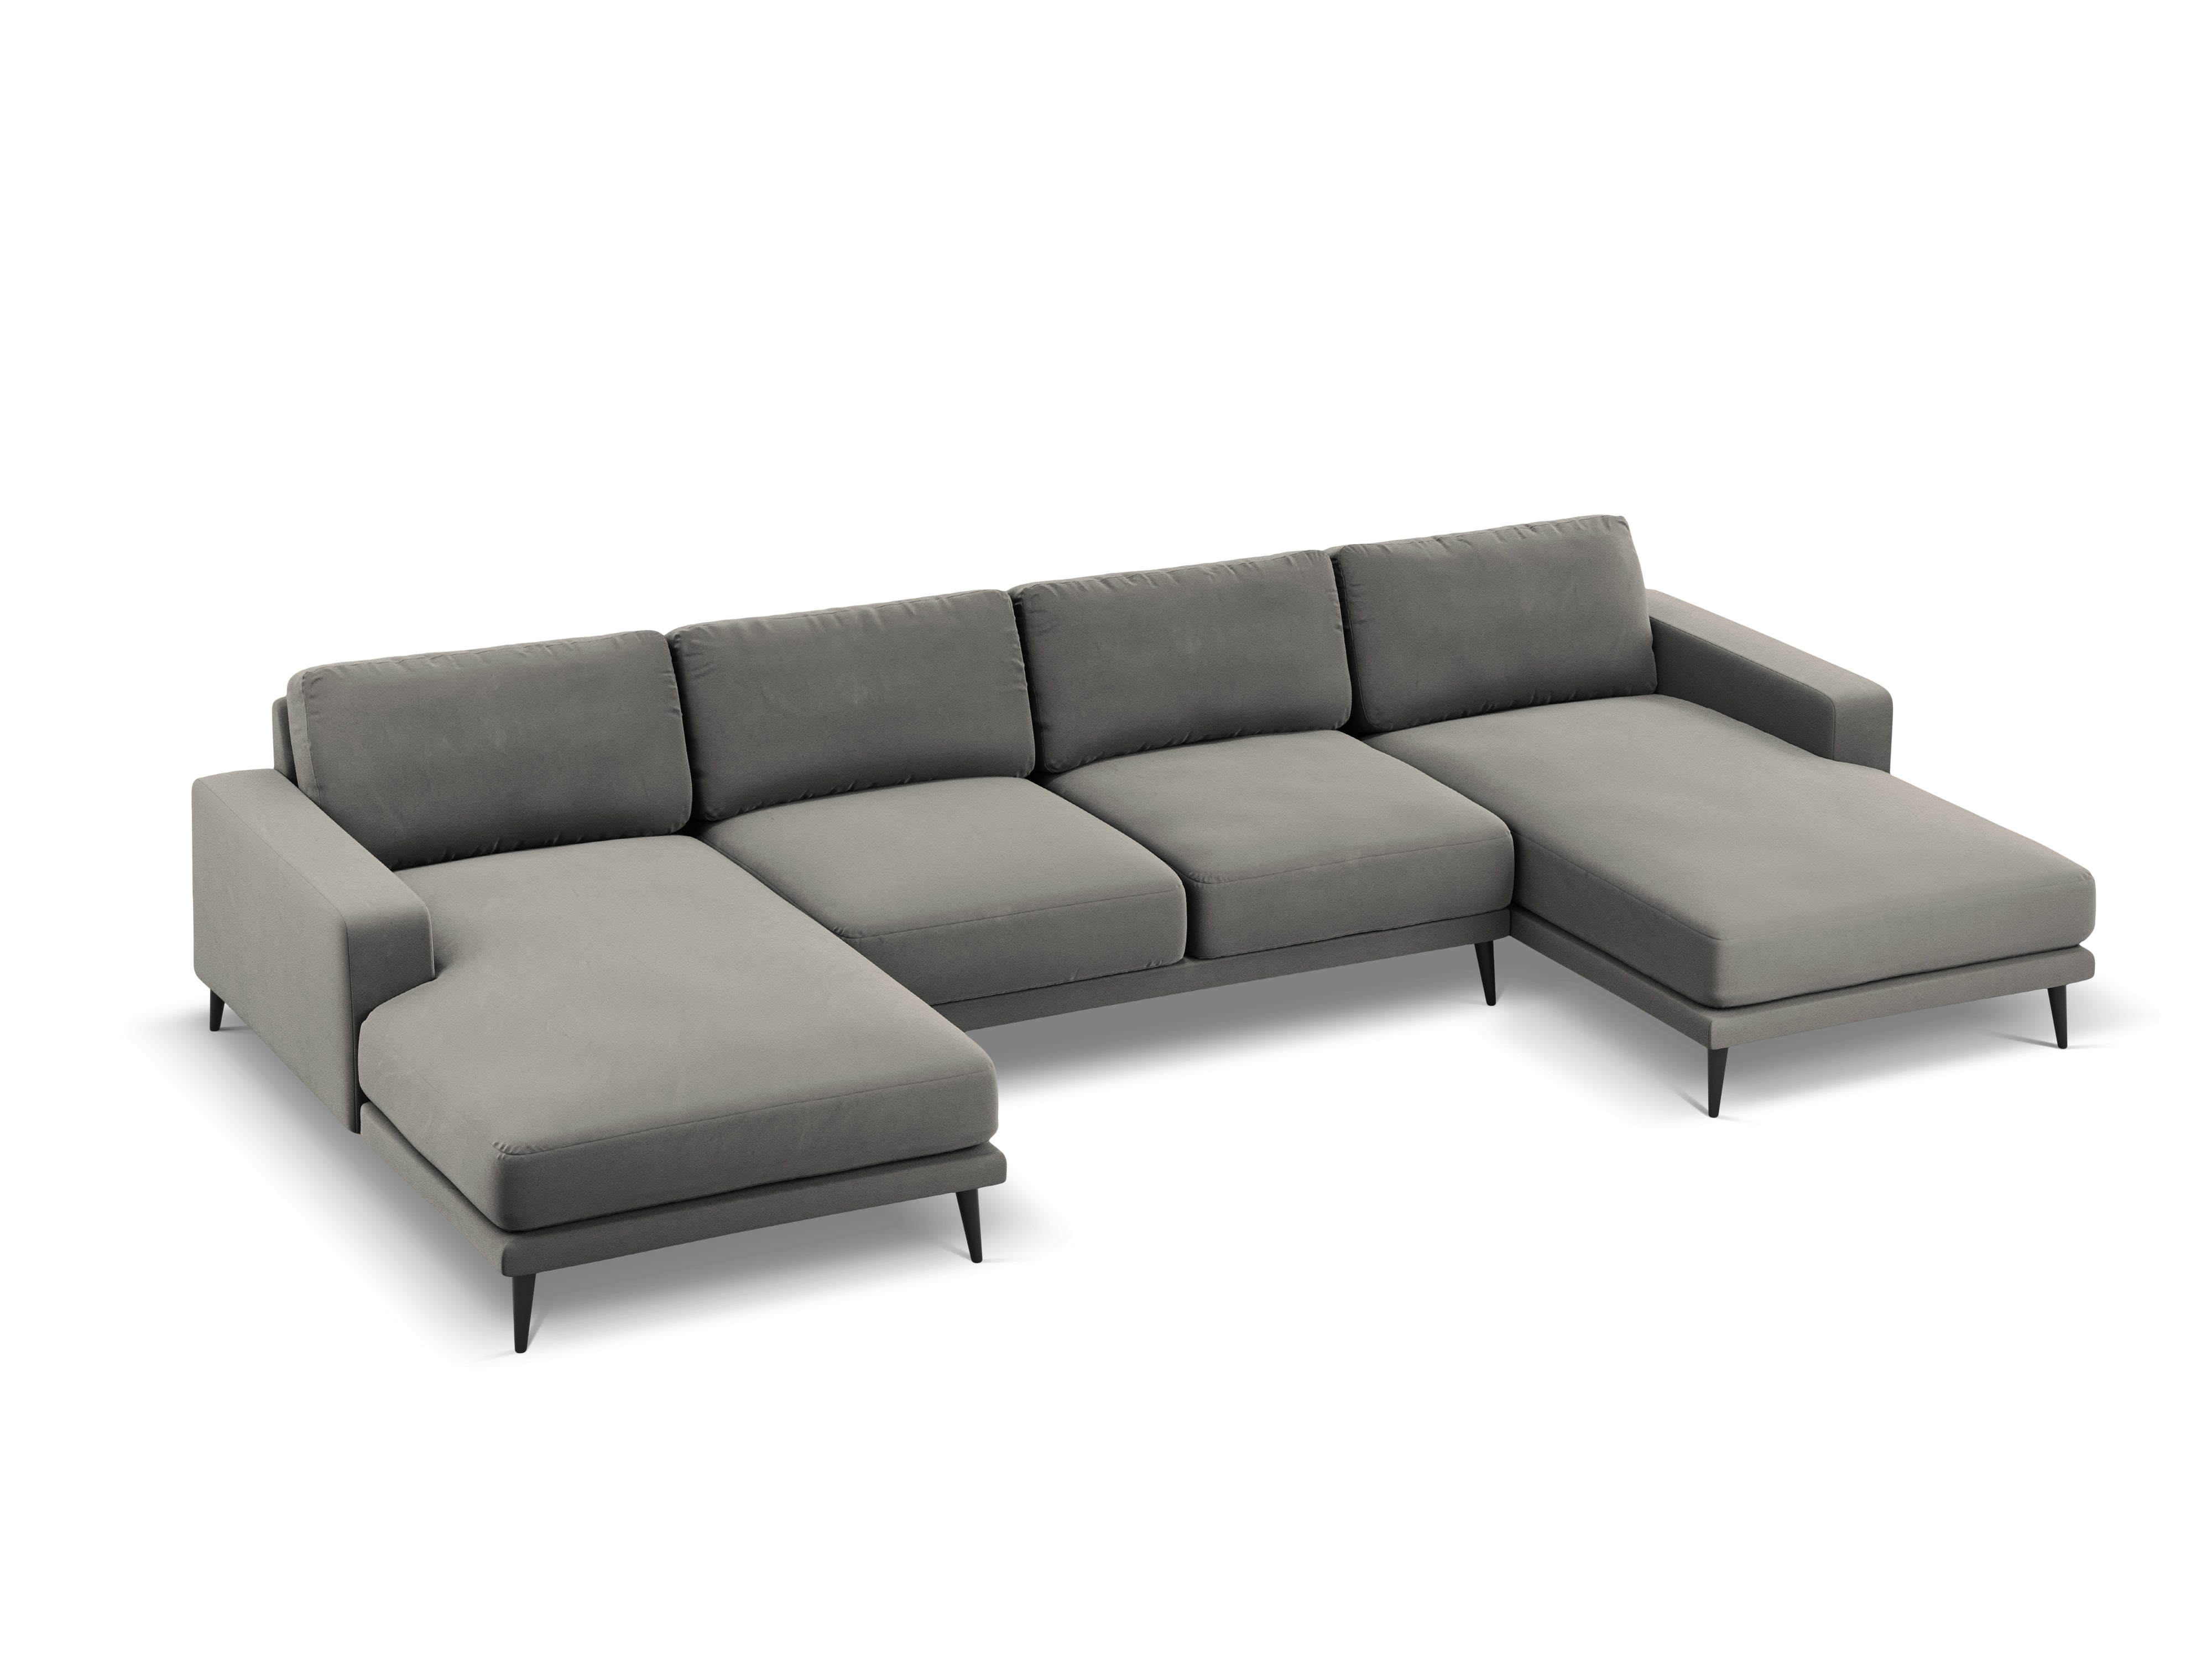 Velvet Panoramic Sofa, "Kylie", 6 Seats, 302x160x80
Made in Europe, Micadoni, Eye on Design